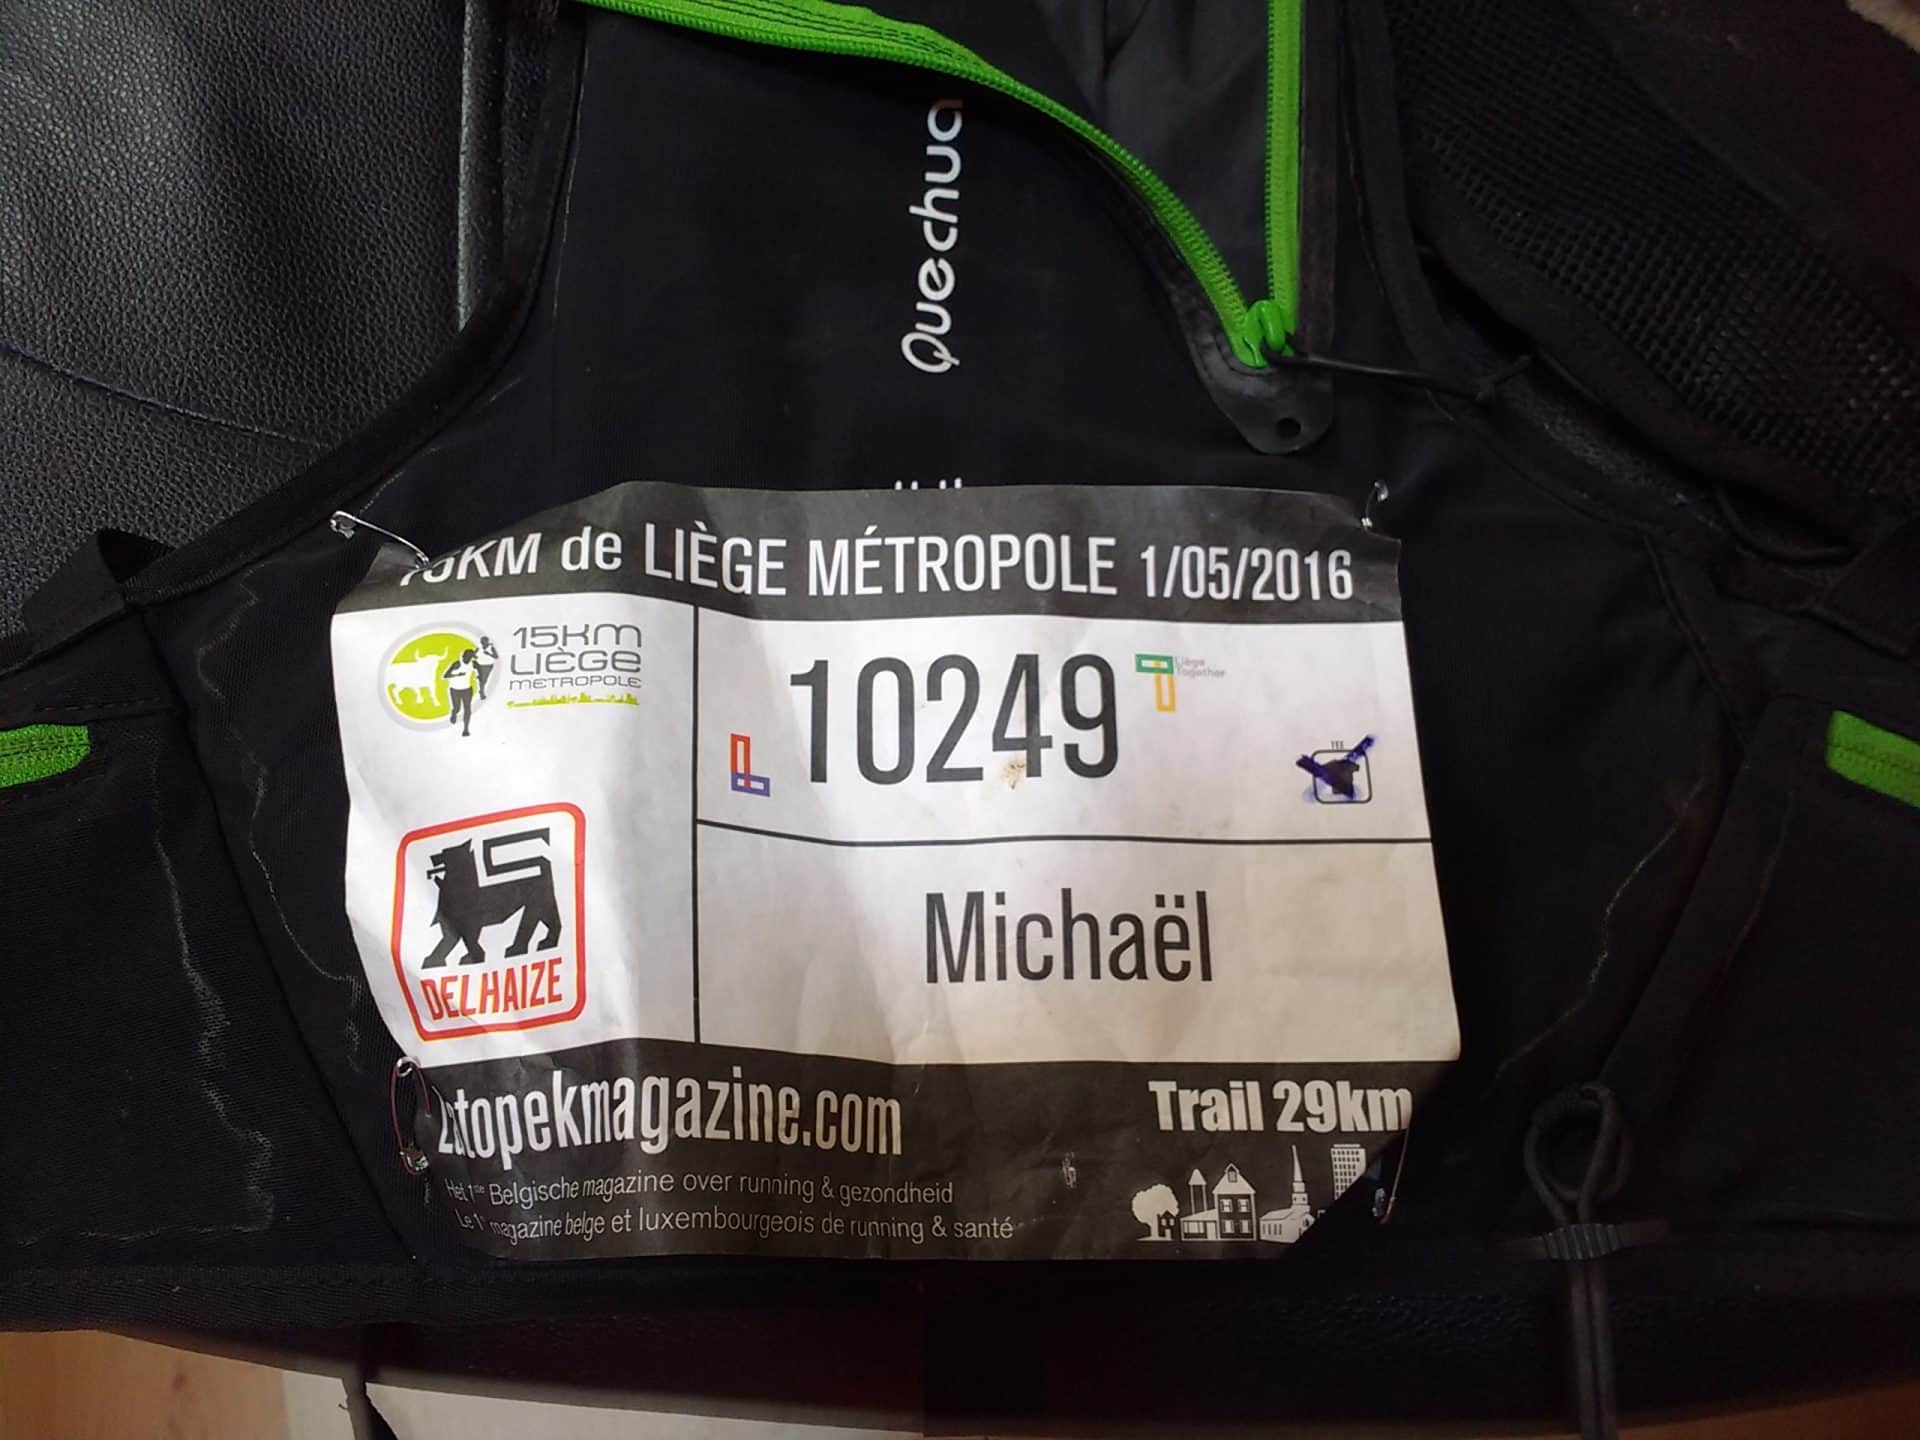 Trail de Liège Métropole 2016 (29km)